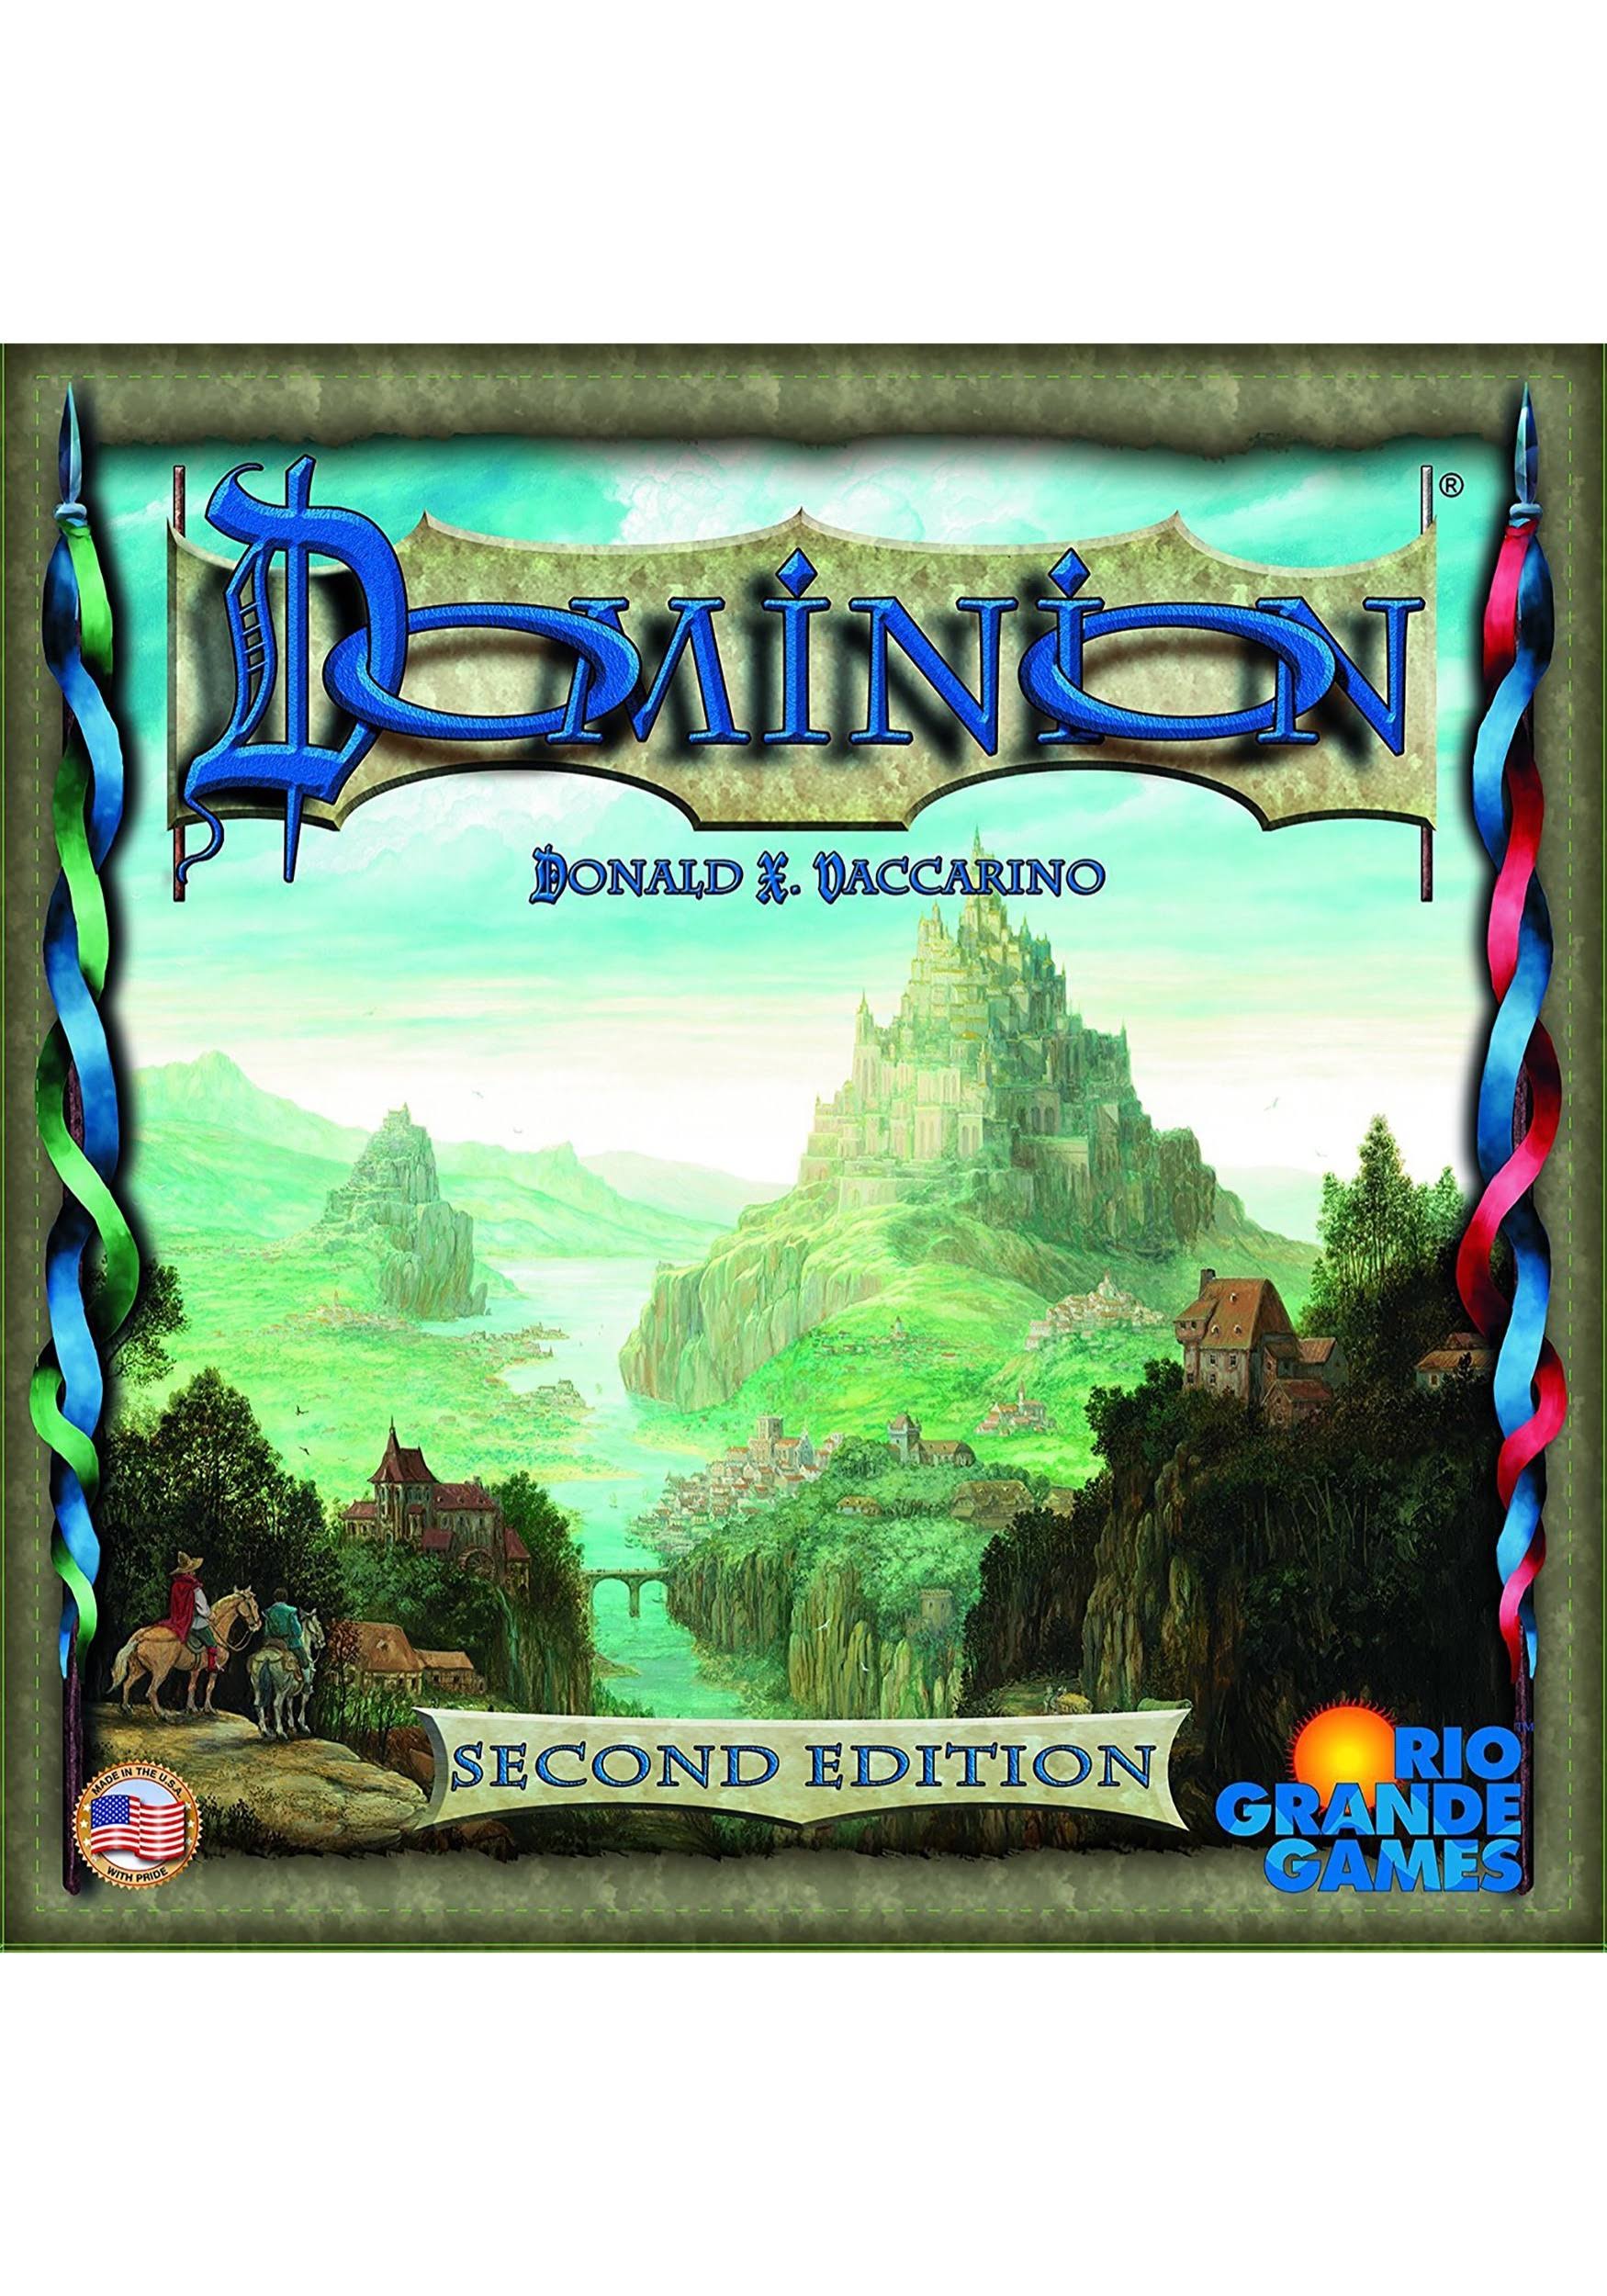 Dominion 2nd Edition Board Game